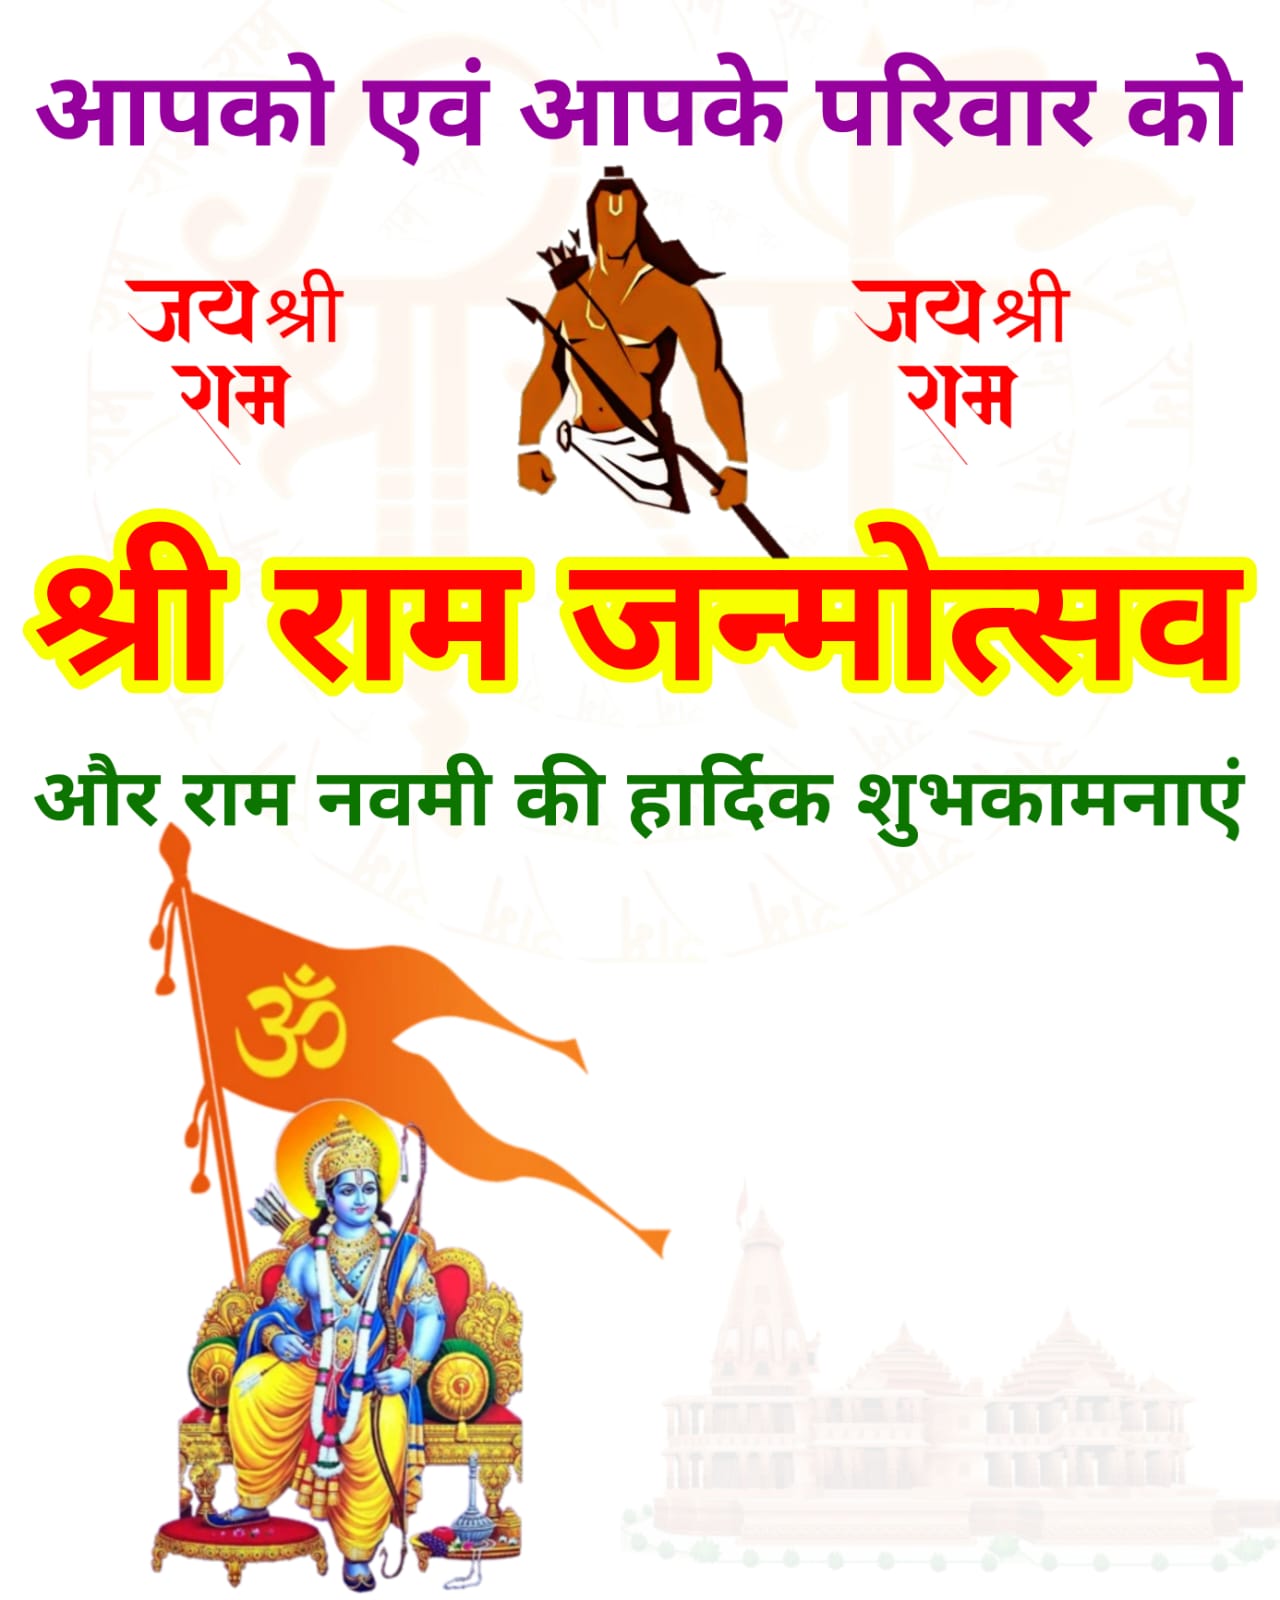 Shri Ram Navami ki Hardik Shubhkamnaye poster banner images